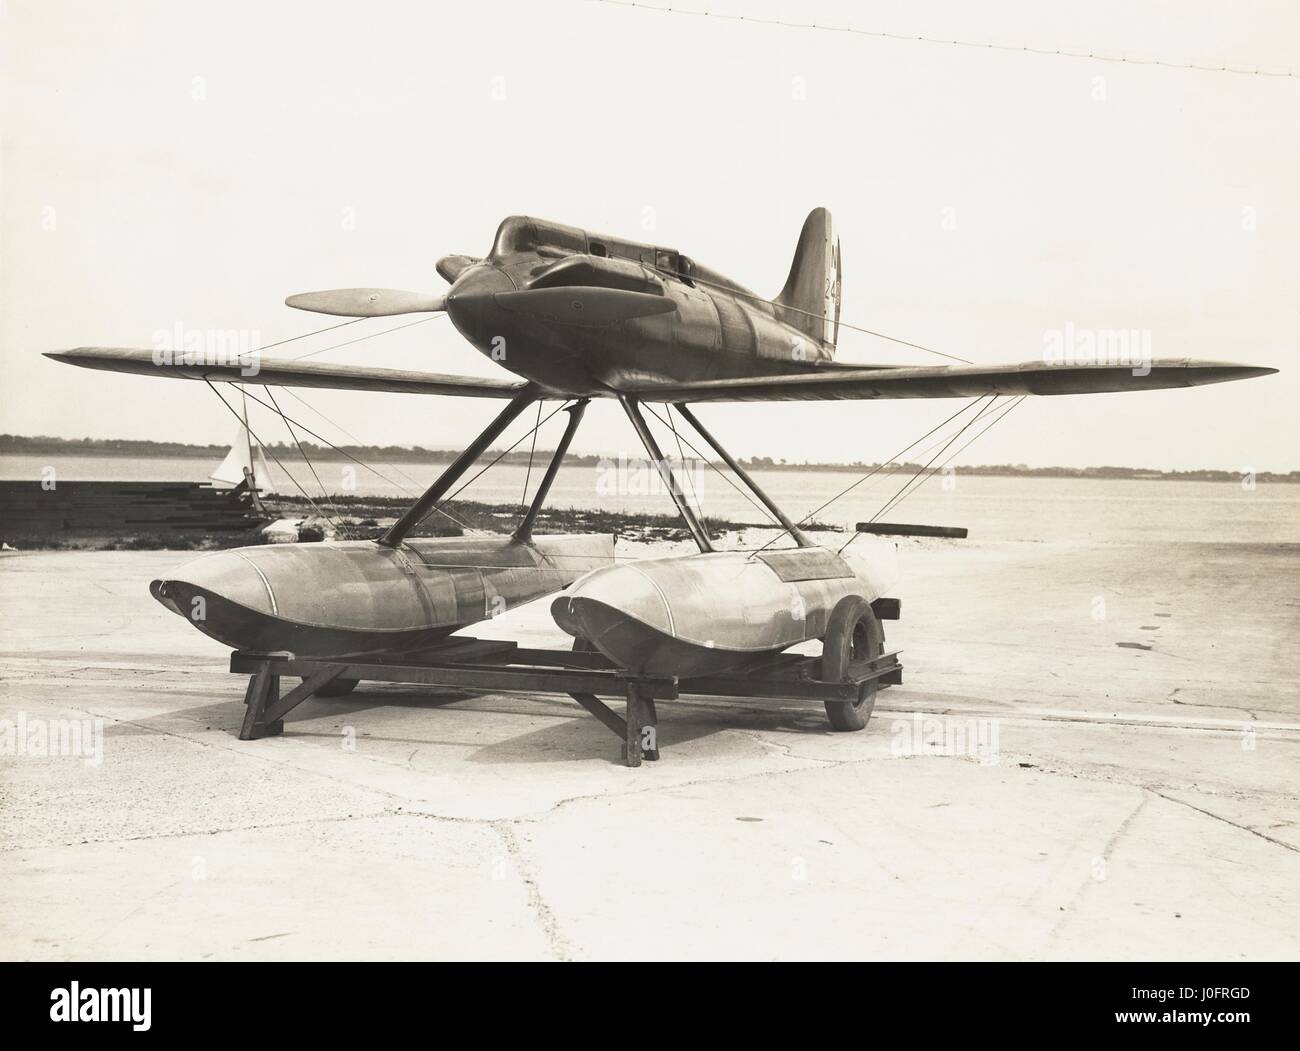 Golden Arrow, the seaplane with Napier Lion VIID engine, winner of the 1929 Schneider Trophy. Stock Photo